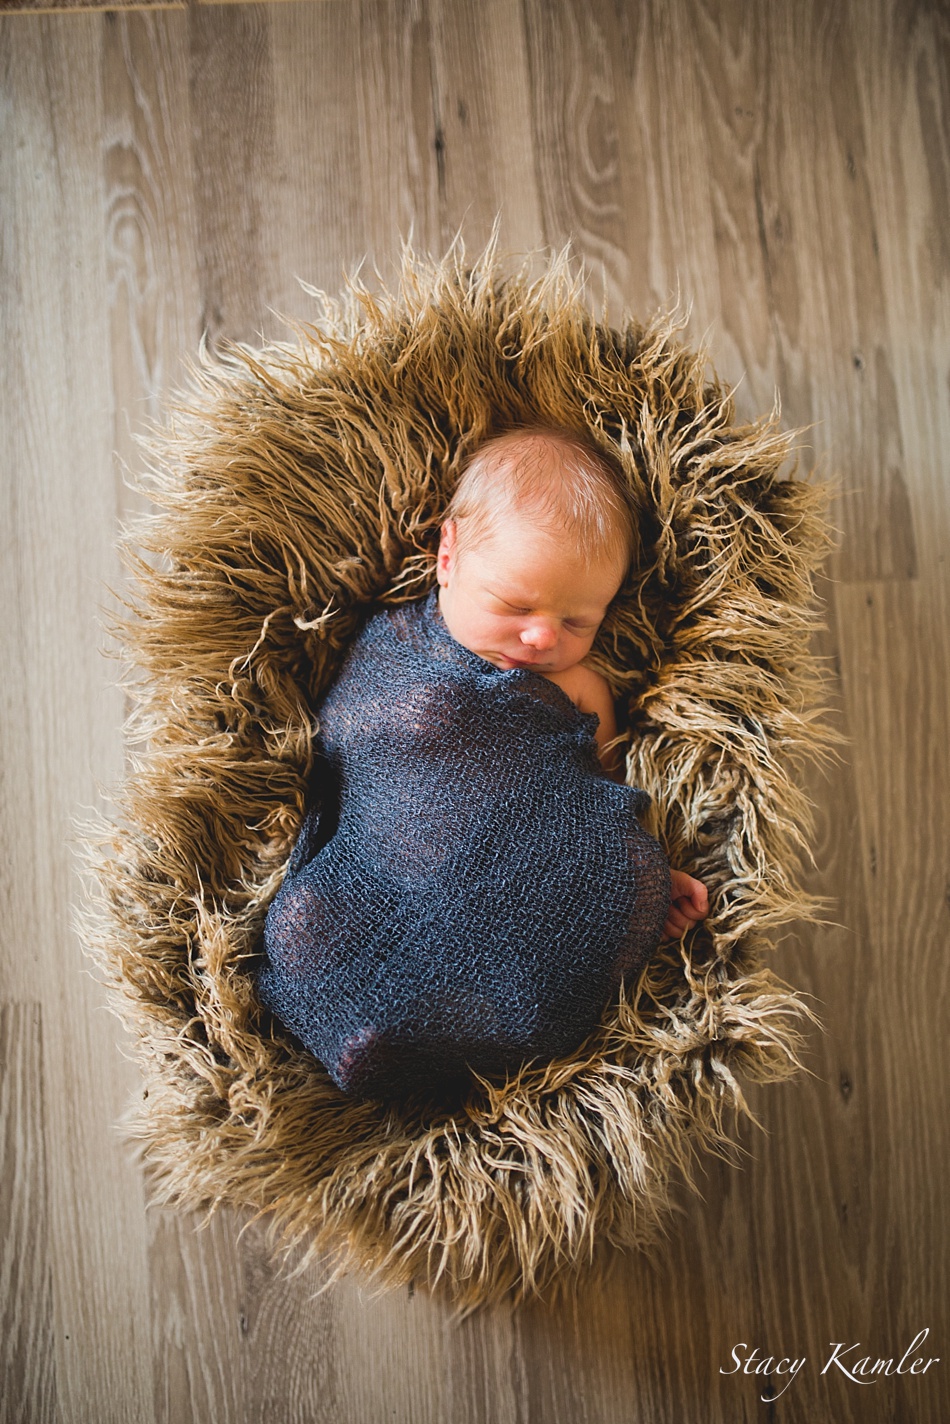 Sleepy Newborn in a basket with brown fake fur